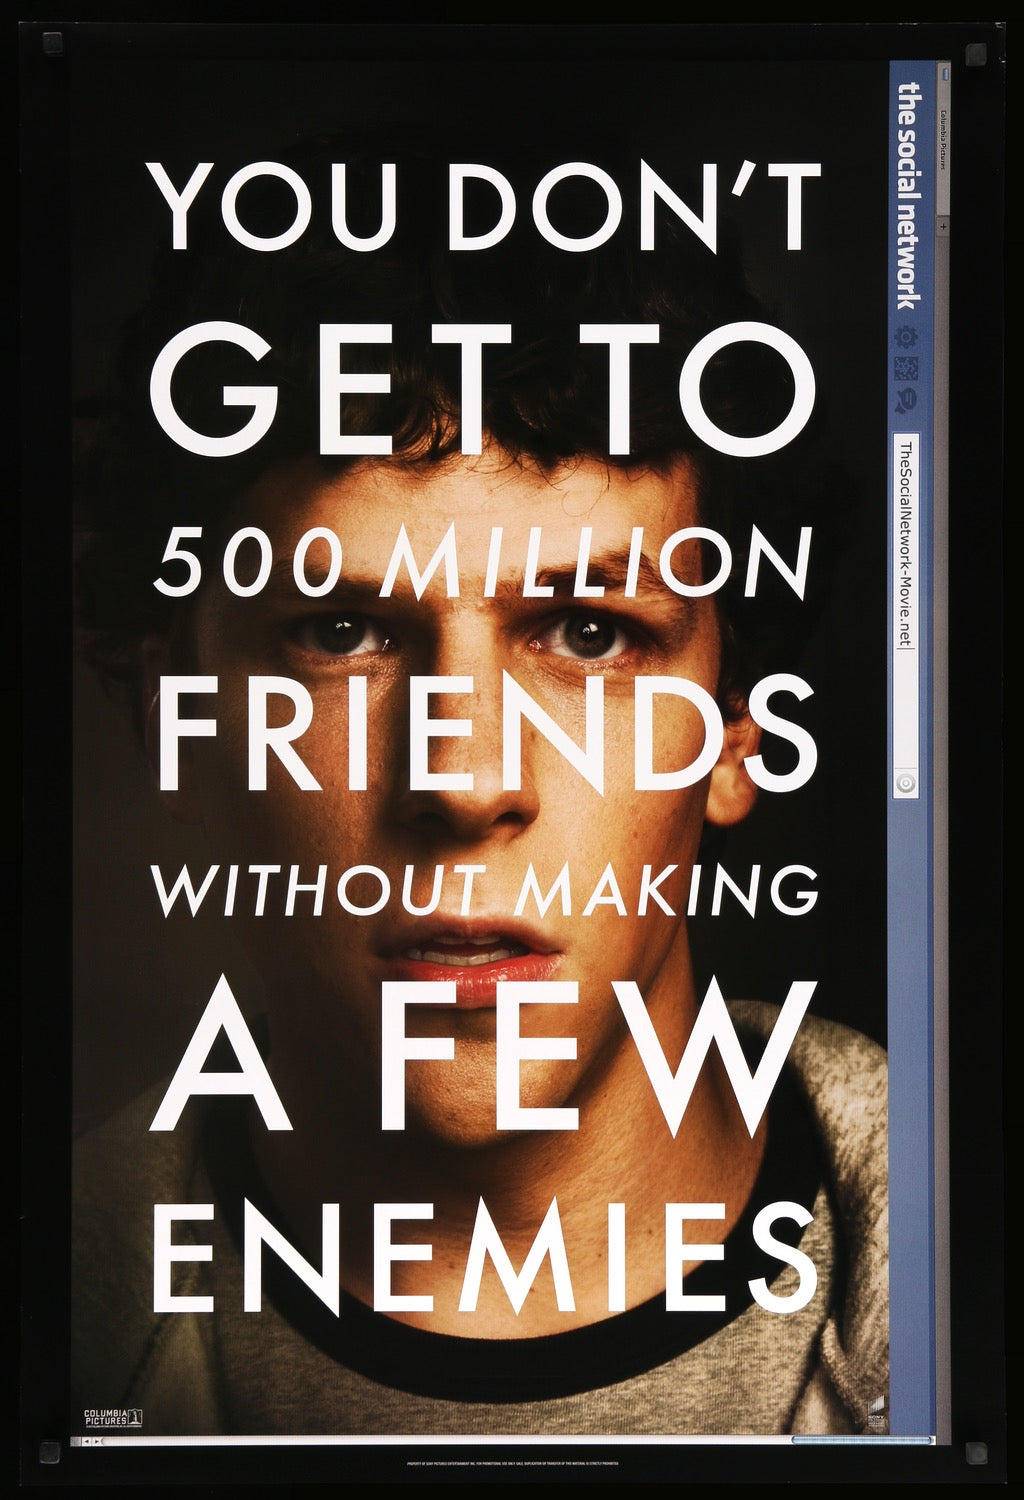 Social Network (2010) original movie poster for sale at Original Film Art